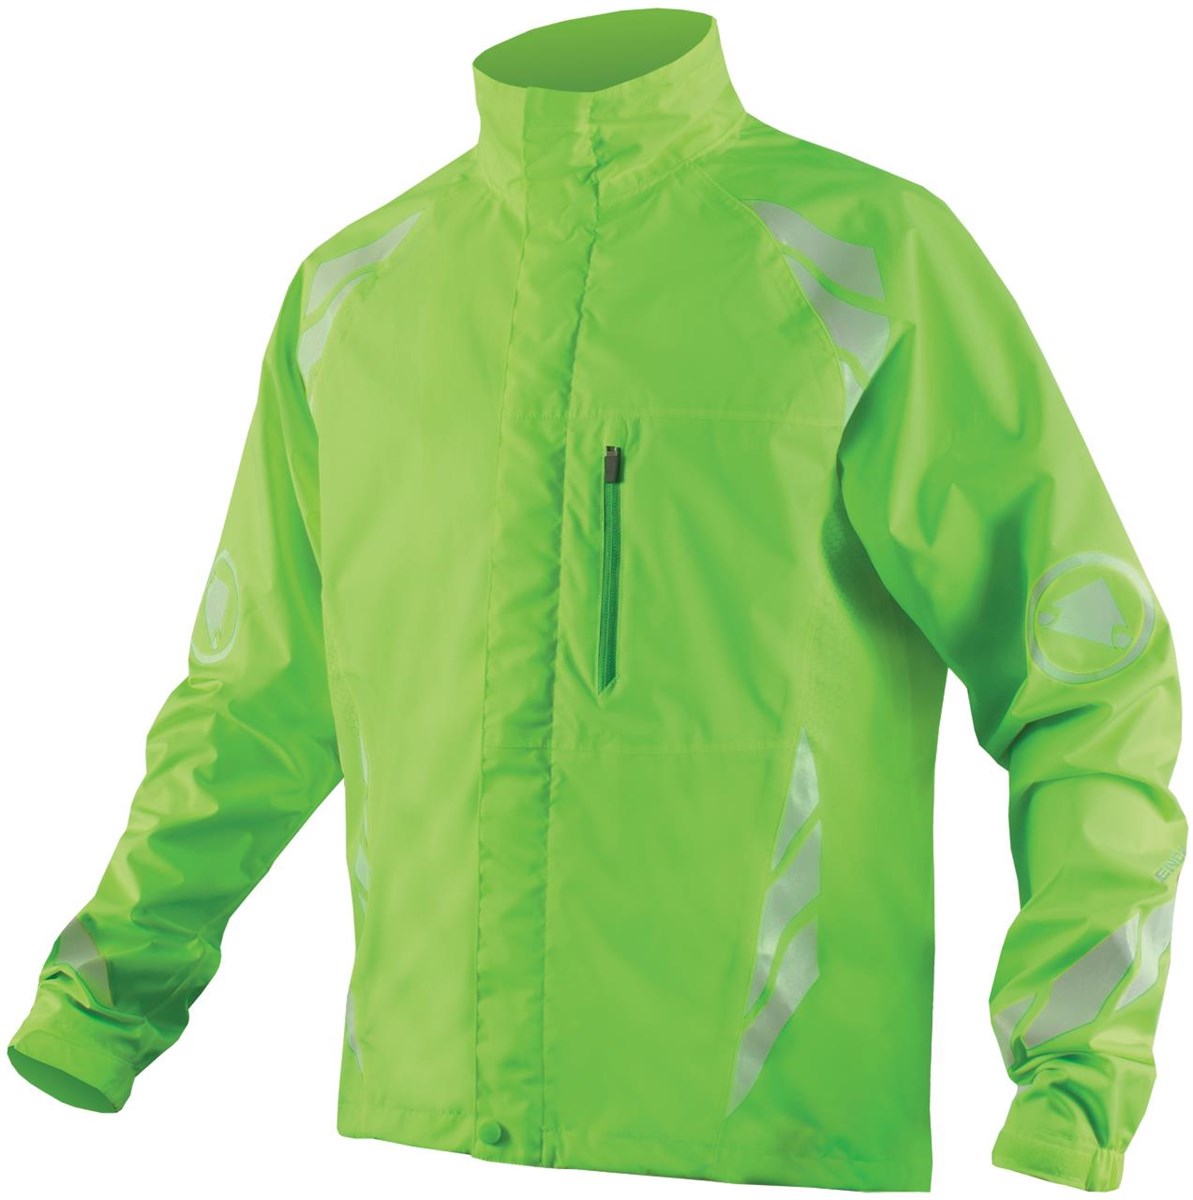 Endura Luminite DL Cycling Jacket With New Luminite II LED